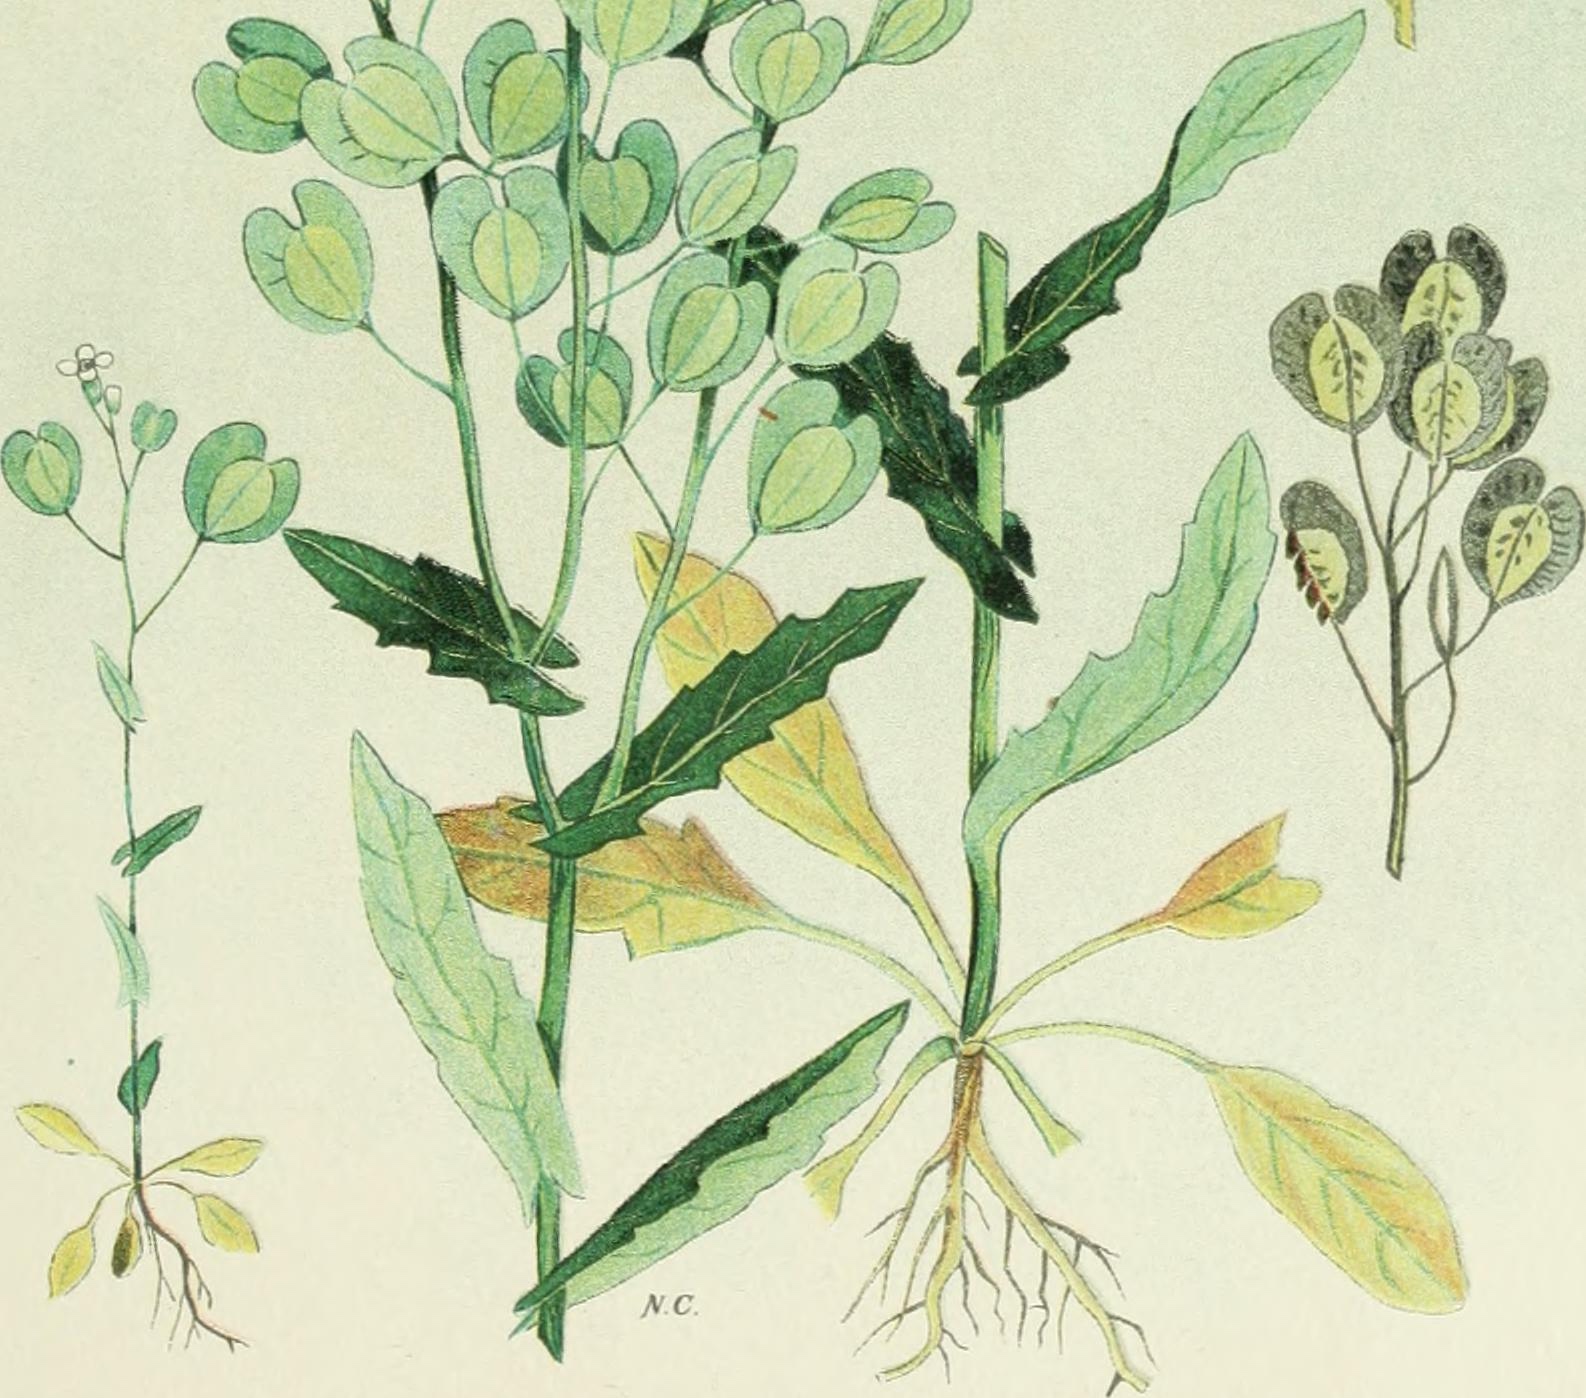 1906 Field Pennycress botanical illustration.